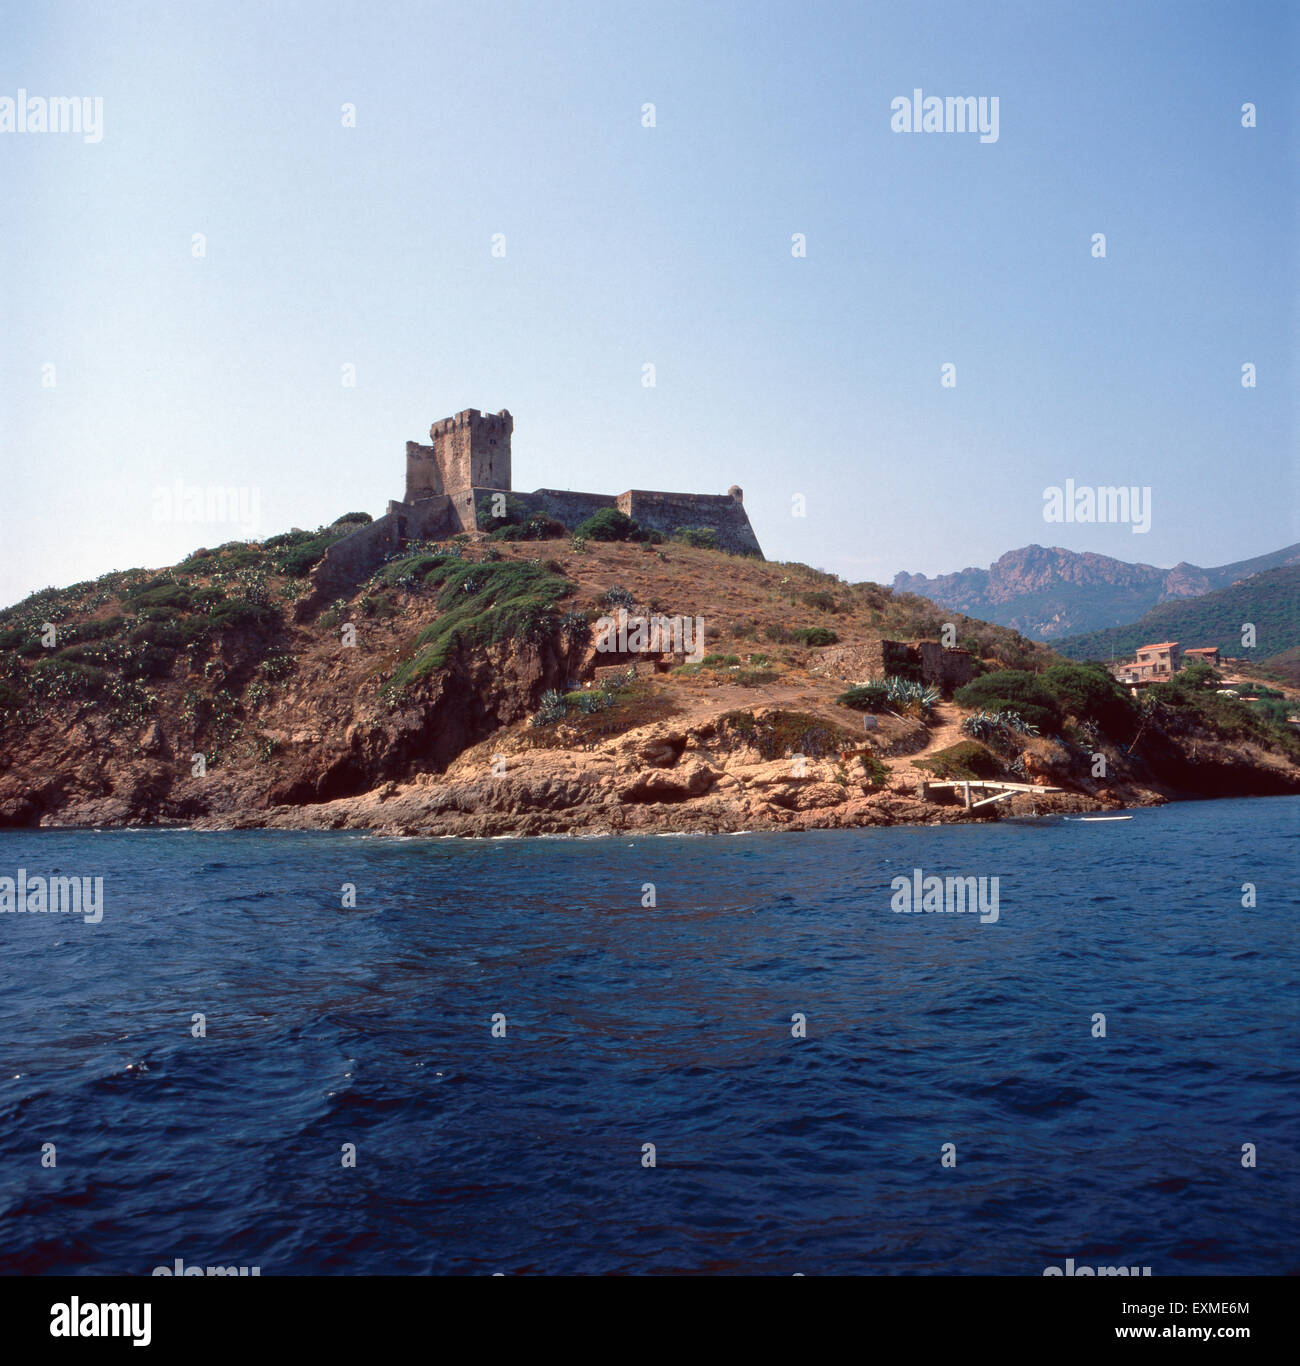 Aussicht auf die Festung von Girolata, Korsika, 1980er Jahre. Vue sur le château de Girolata, Corse, 1980. Banque D'Images